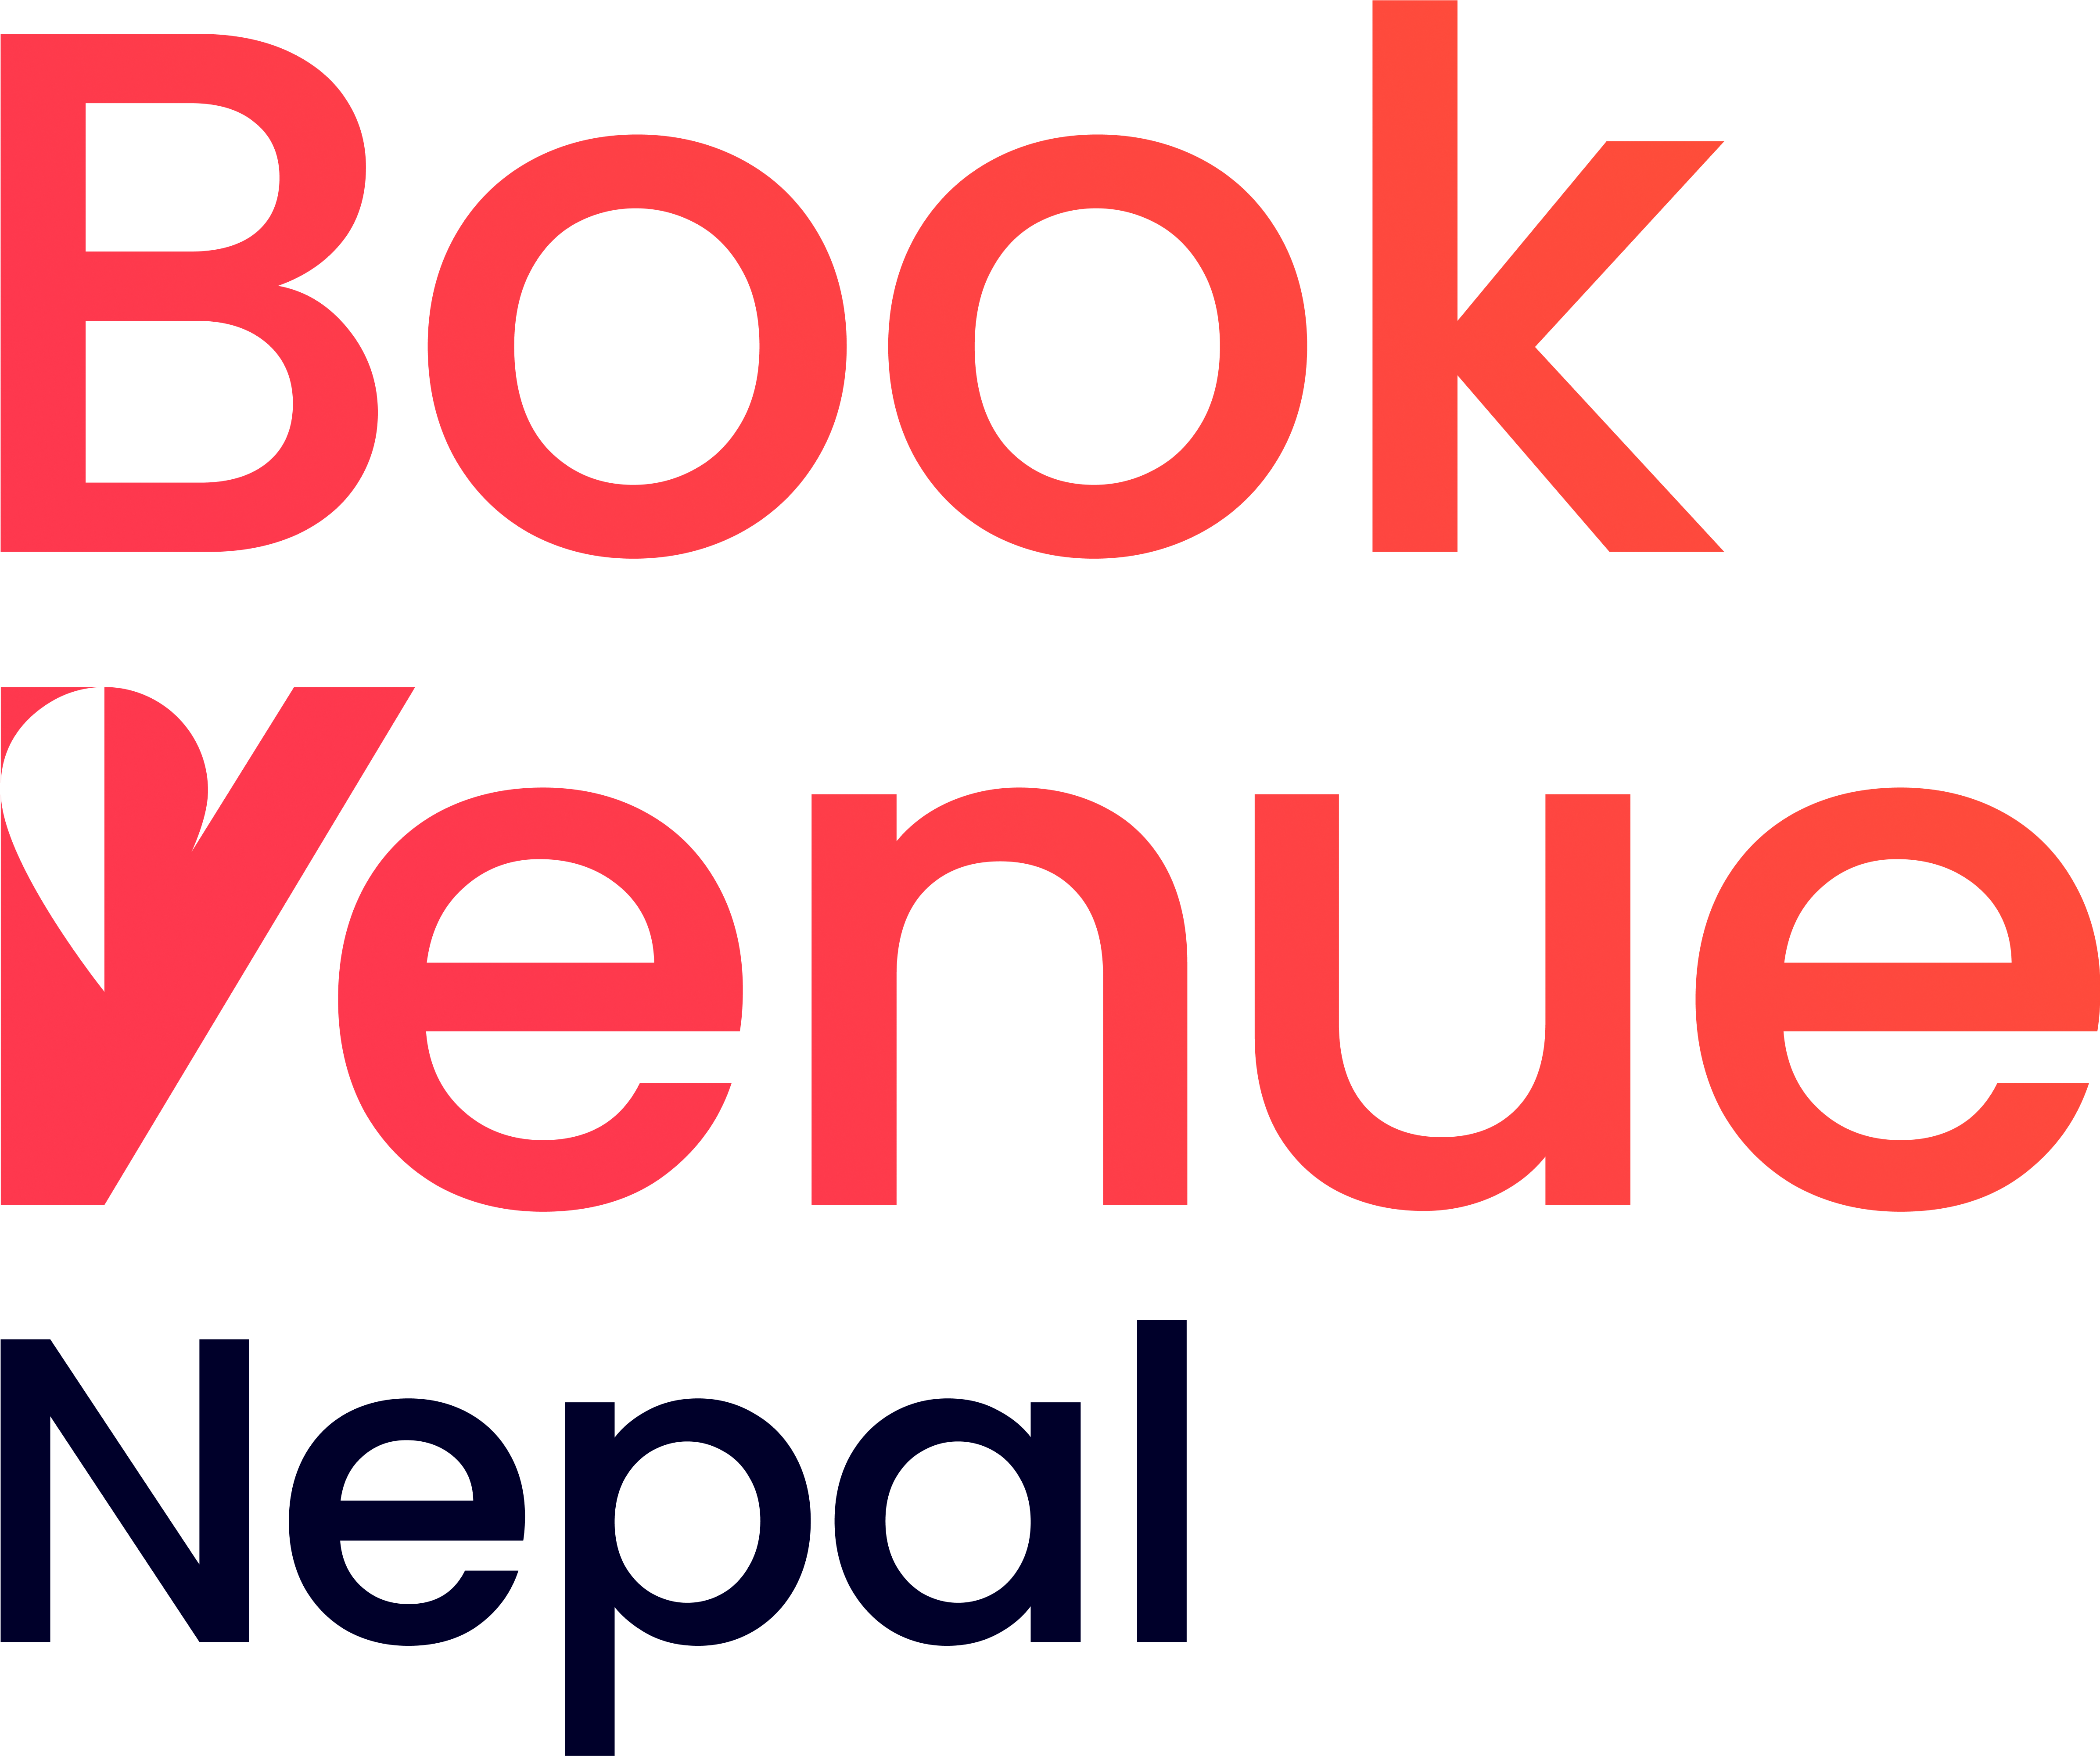 Book venue nepal logo